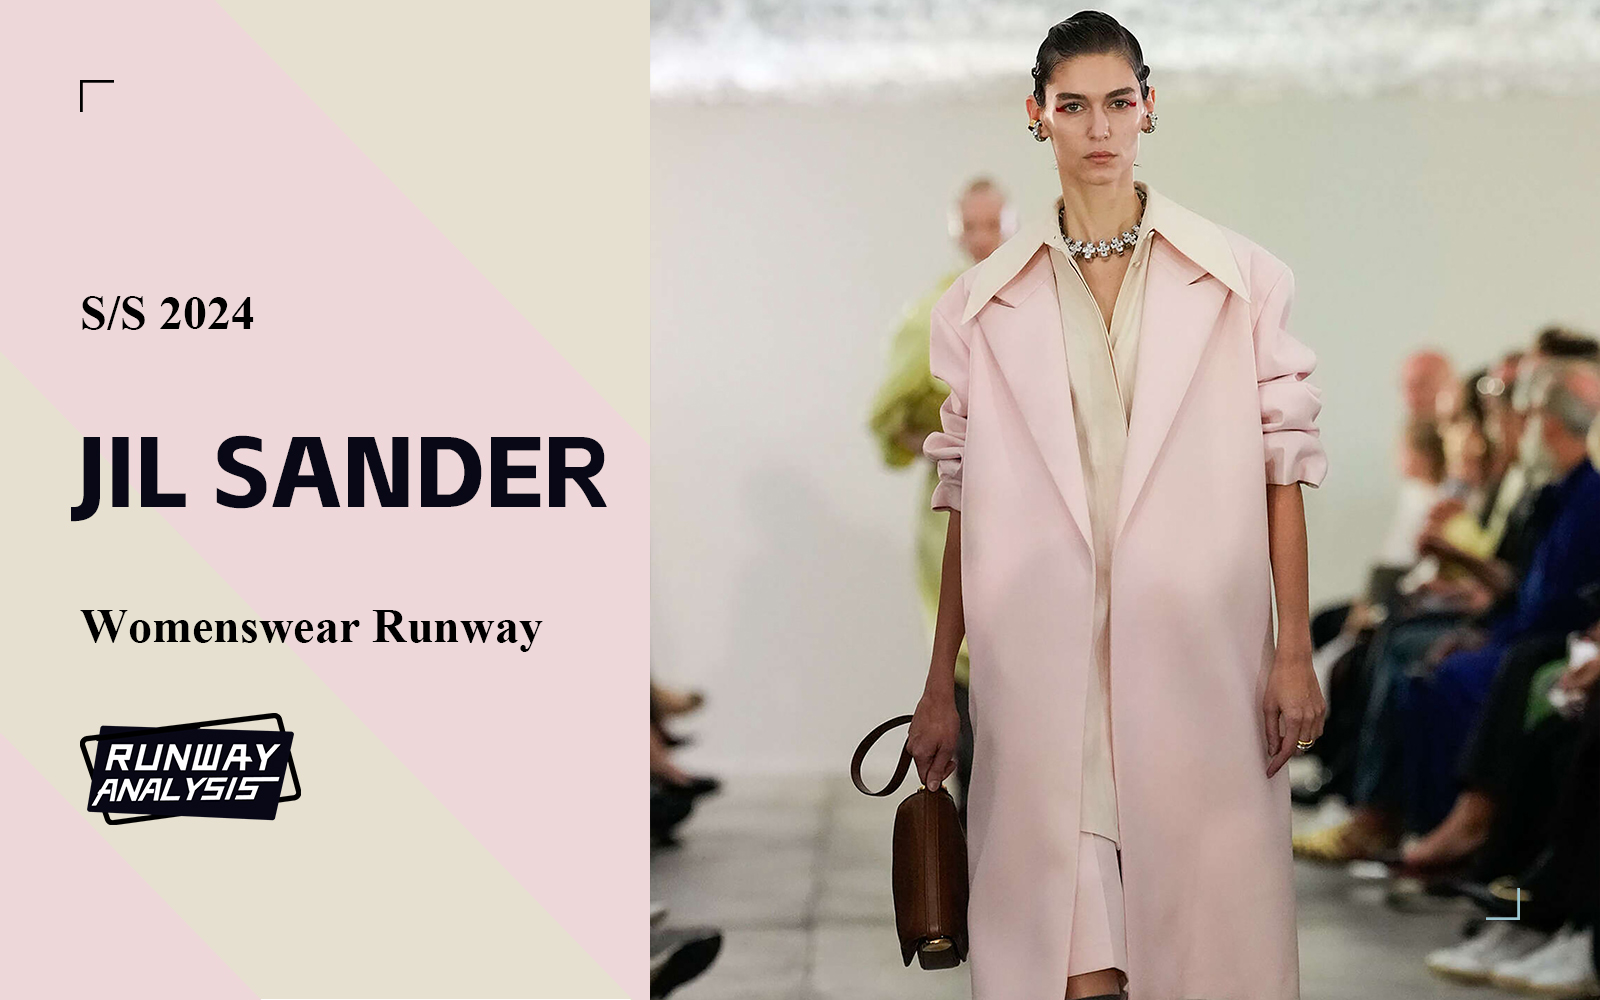 The Womenswear Runway Analysis of Jil Sander